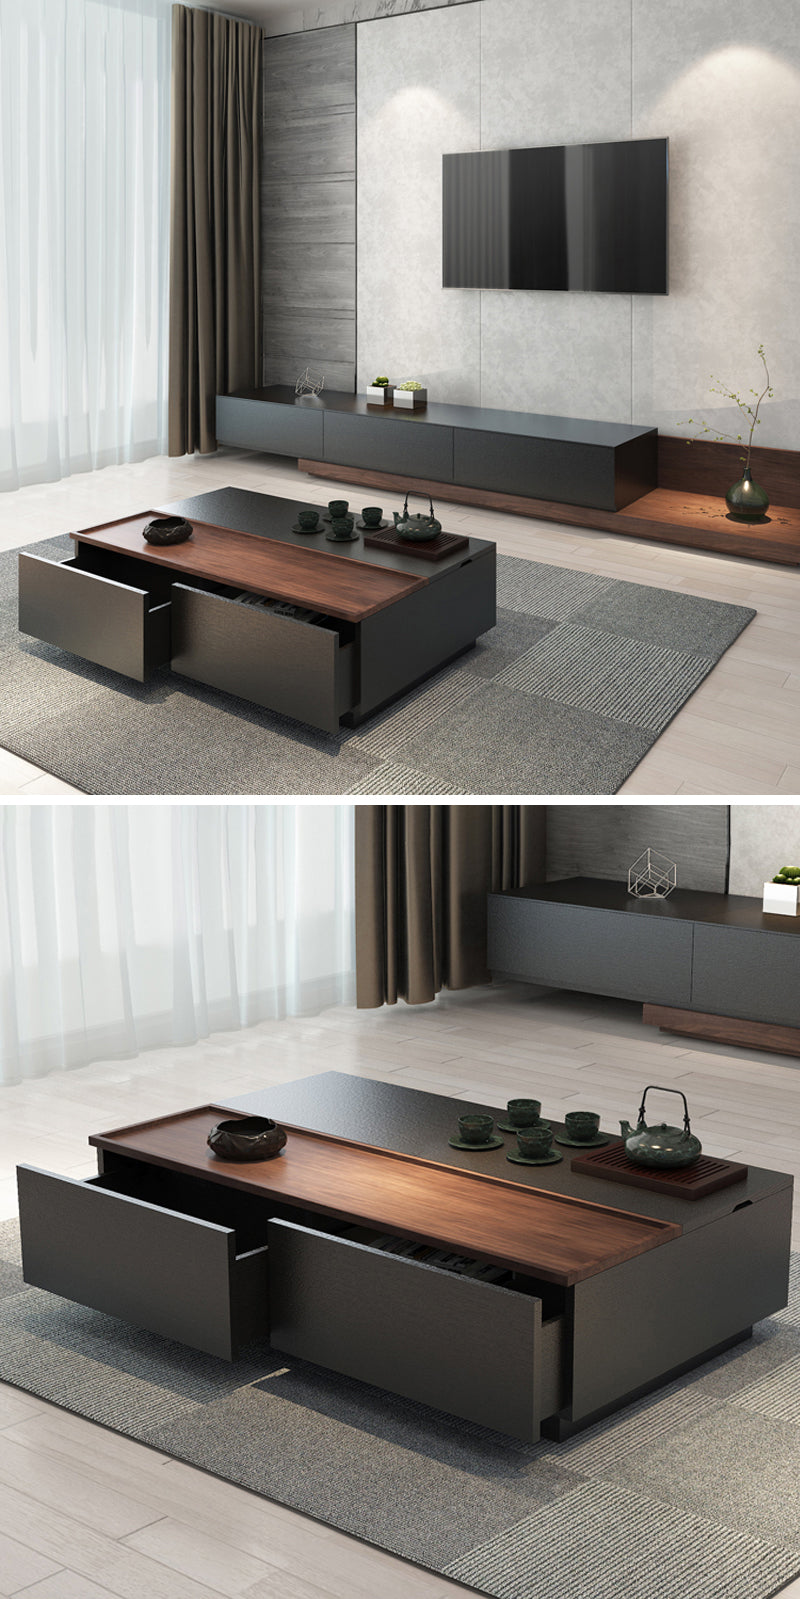 INDOORPLUS公式/高級感を感じさせるエレガントなデザインのローテーブル